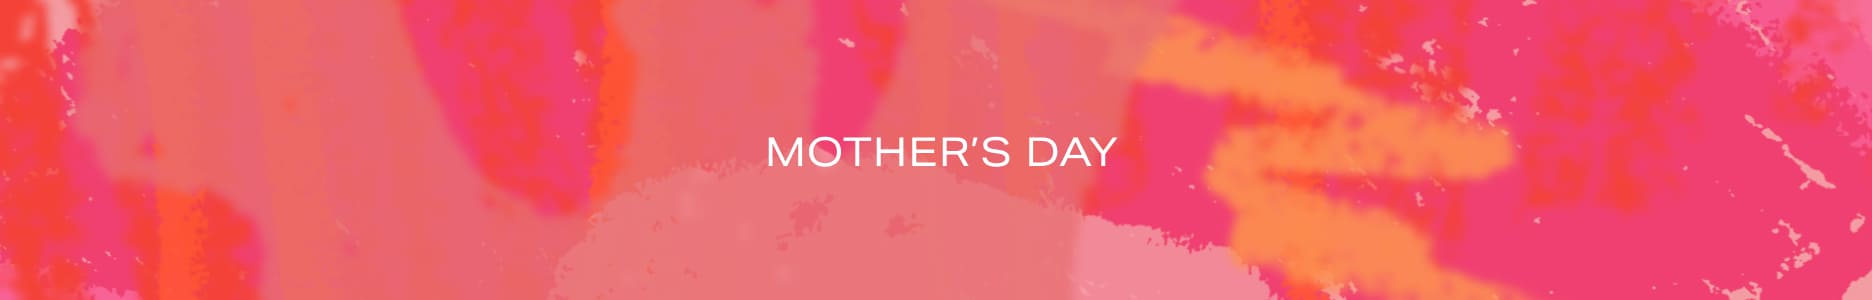 Mother's day Editorial - Banner 1 - Full width - desktop 